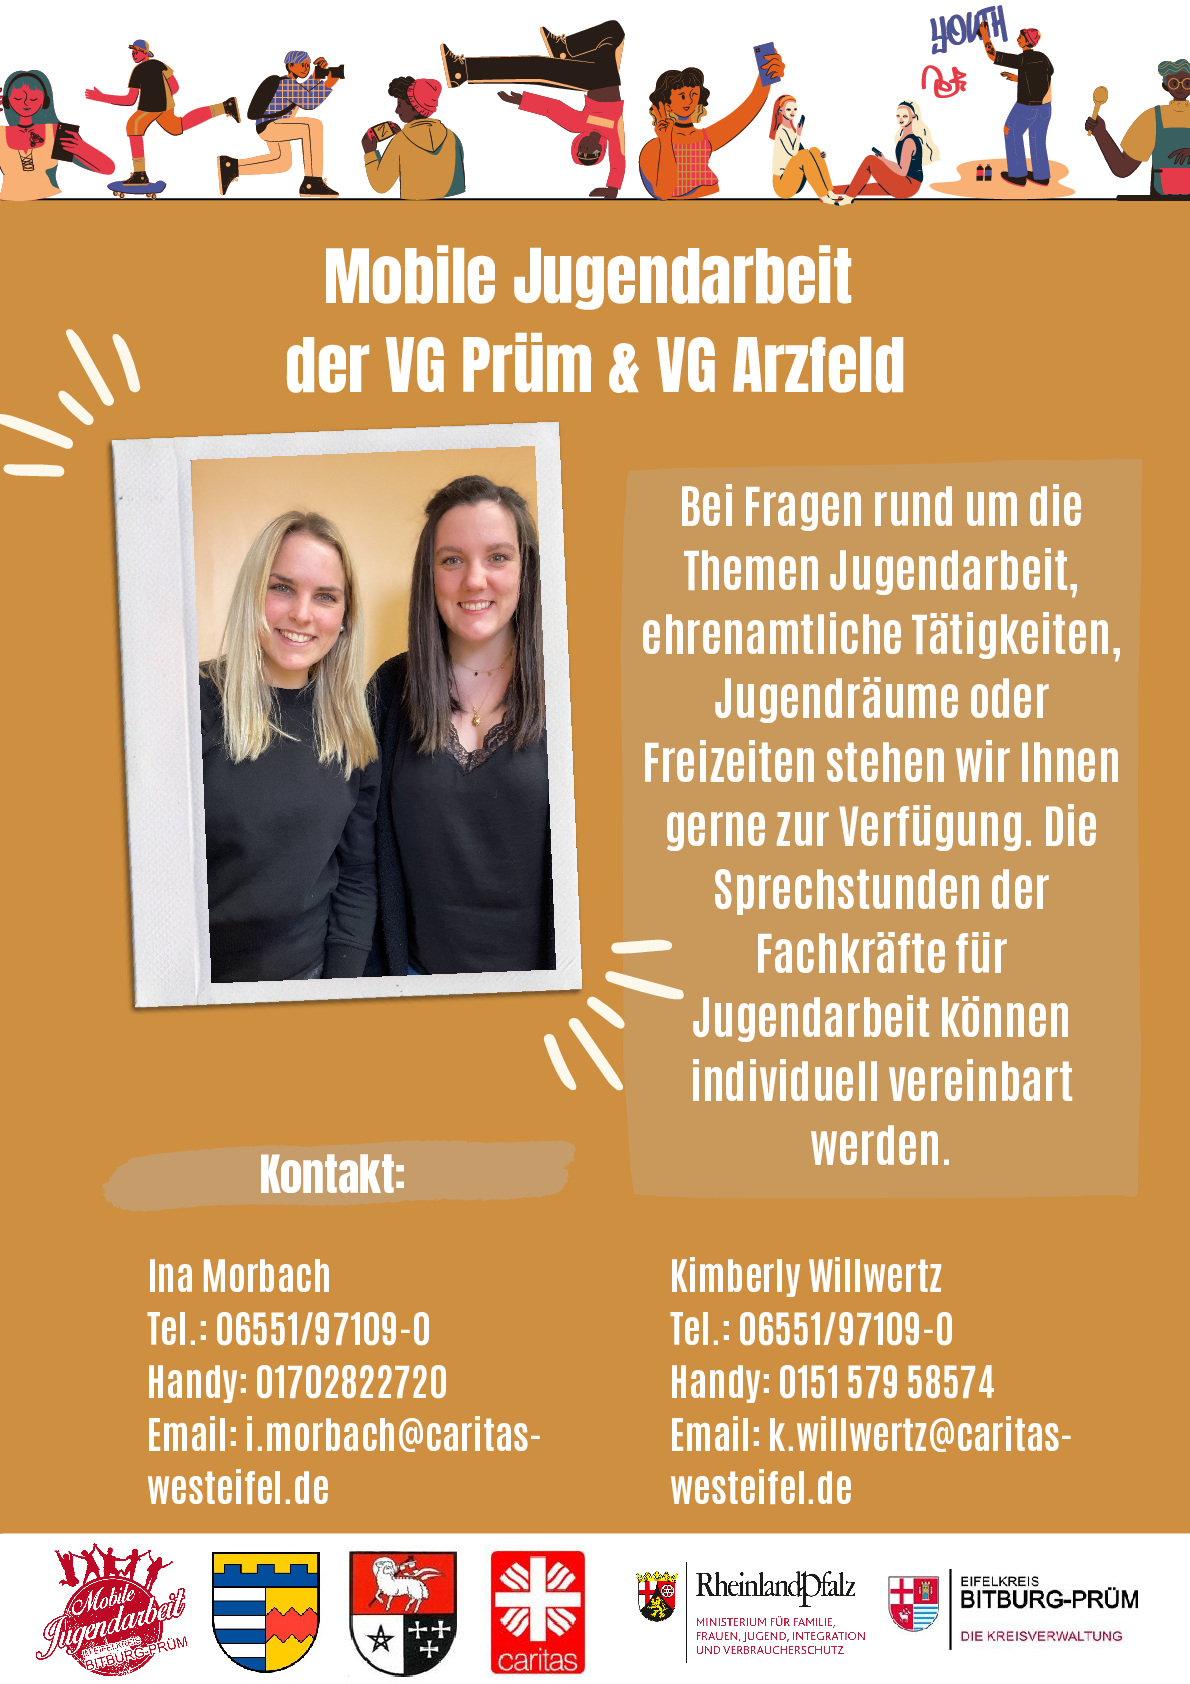 Mobile Jugendarbeit in der VG Arzfeld